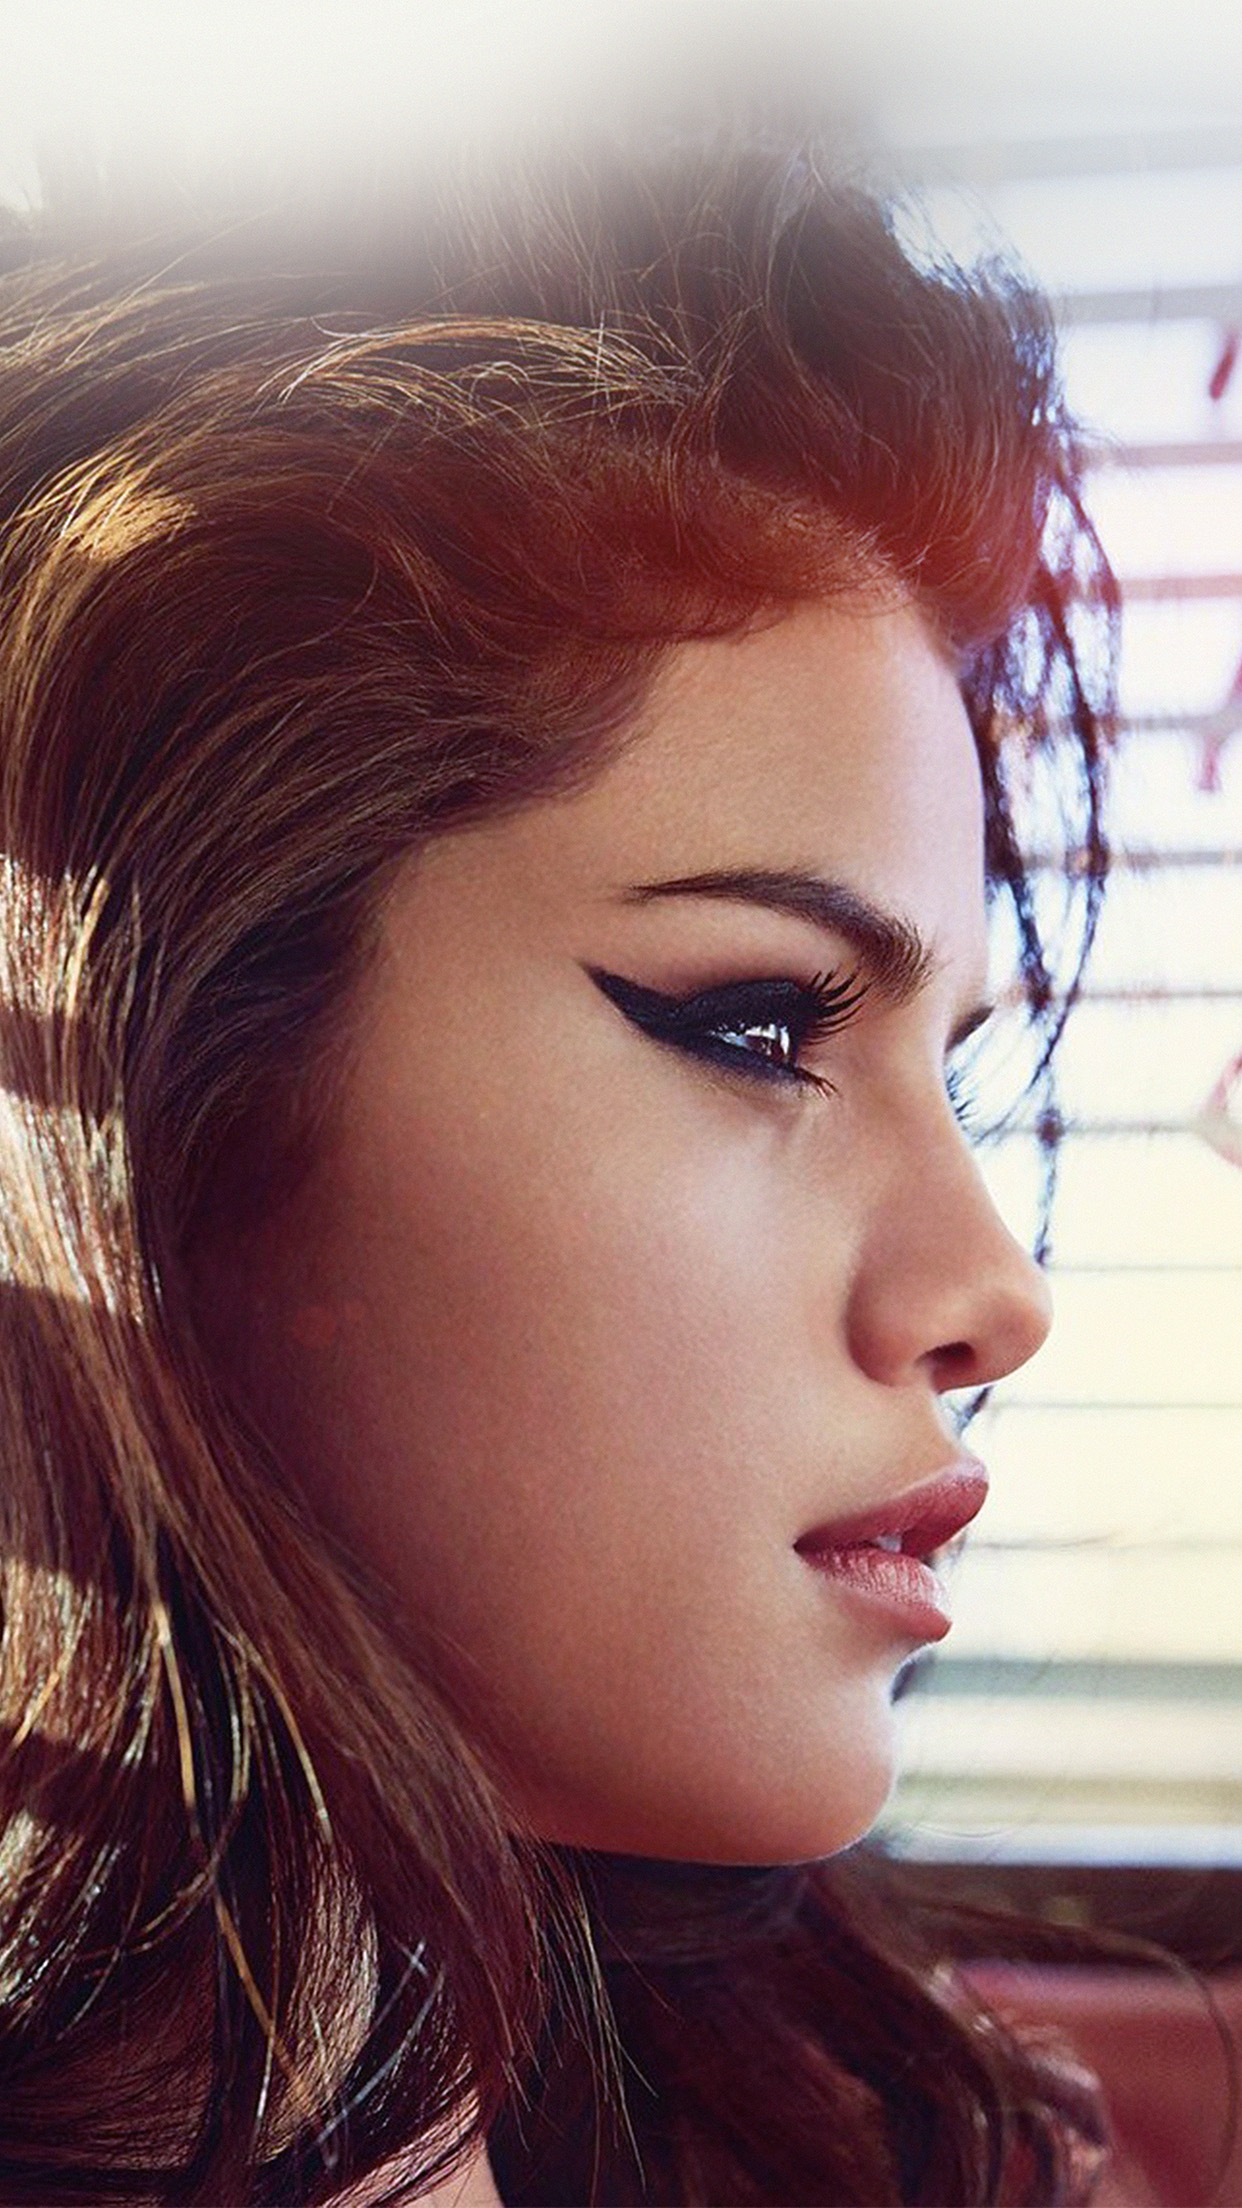 Selena Gomez Face Cute Android wallpaper